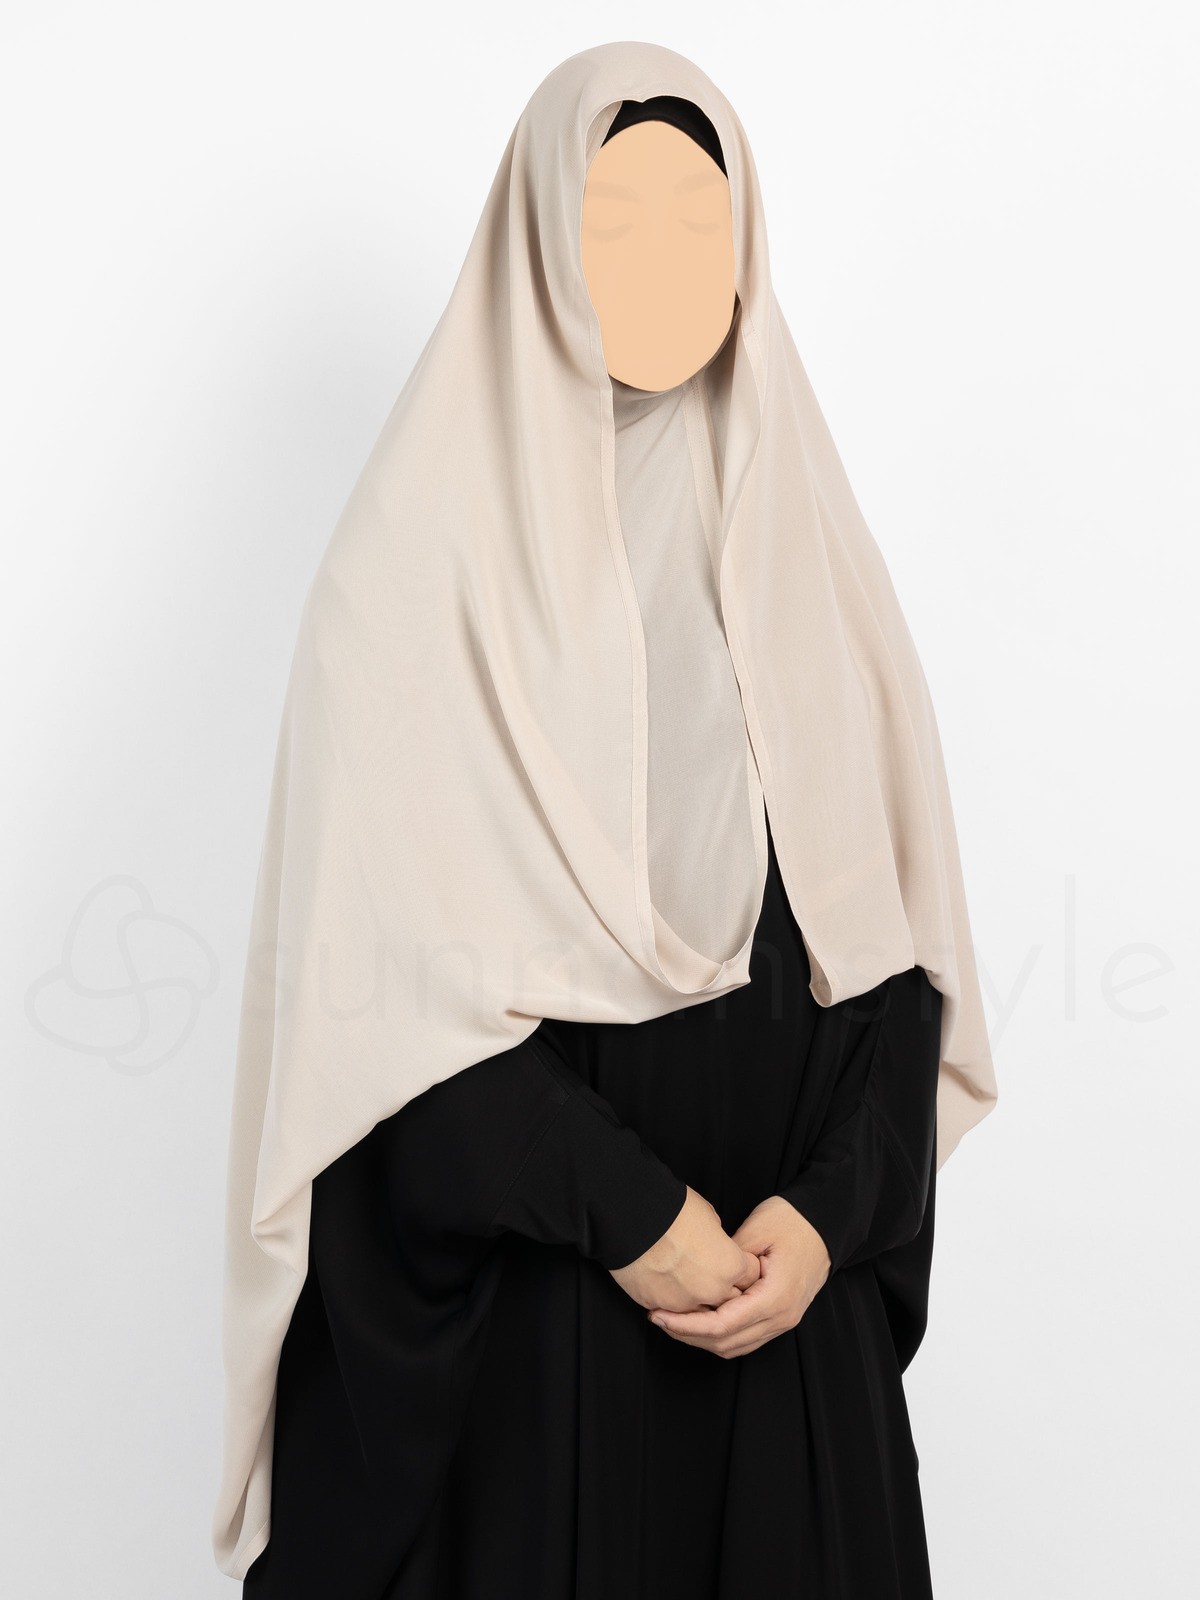 Sunnah Style - Butterfly Hijab (Navy Blue)